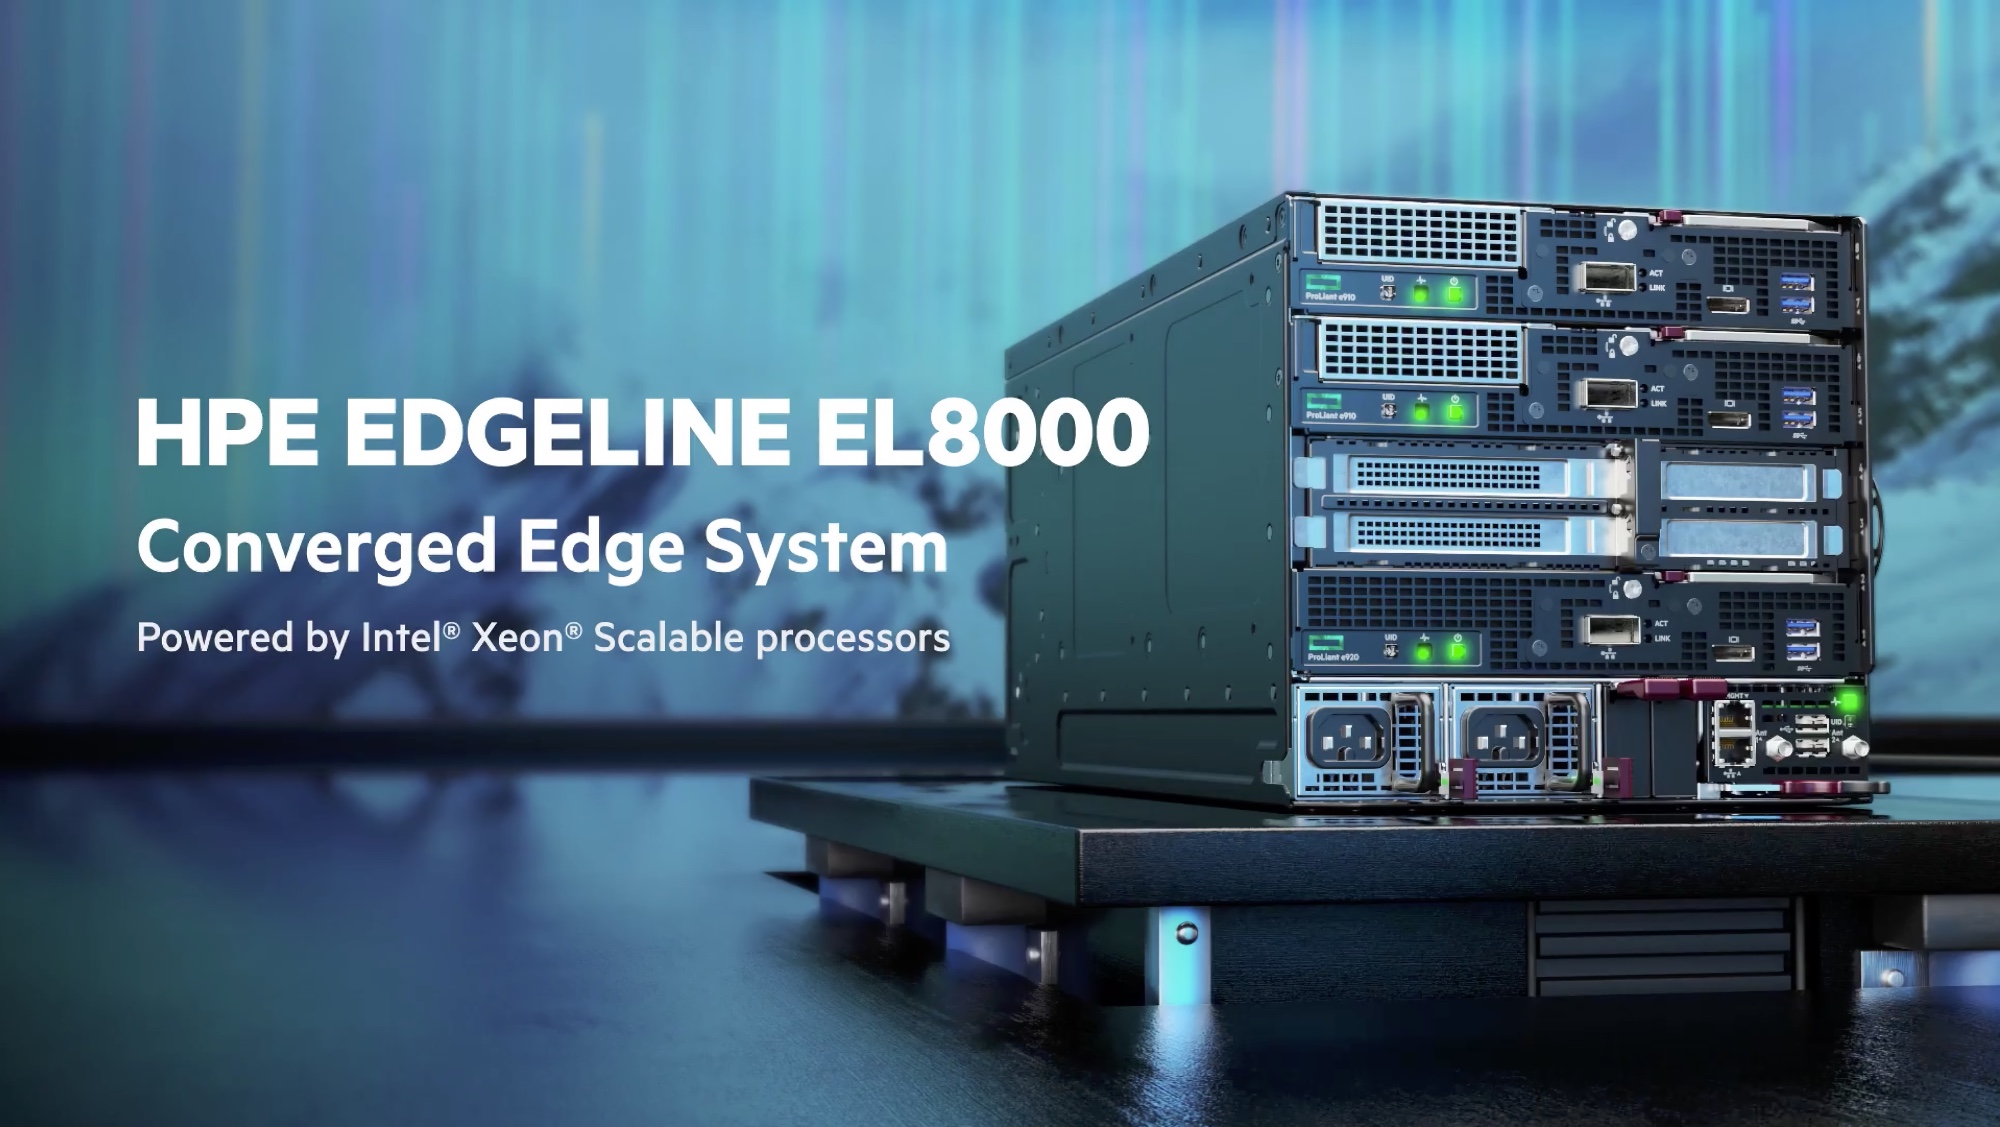 HPE Edgeline EL8000 Converged Edge